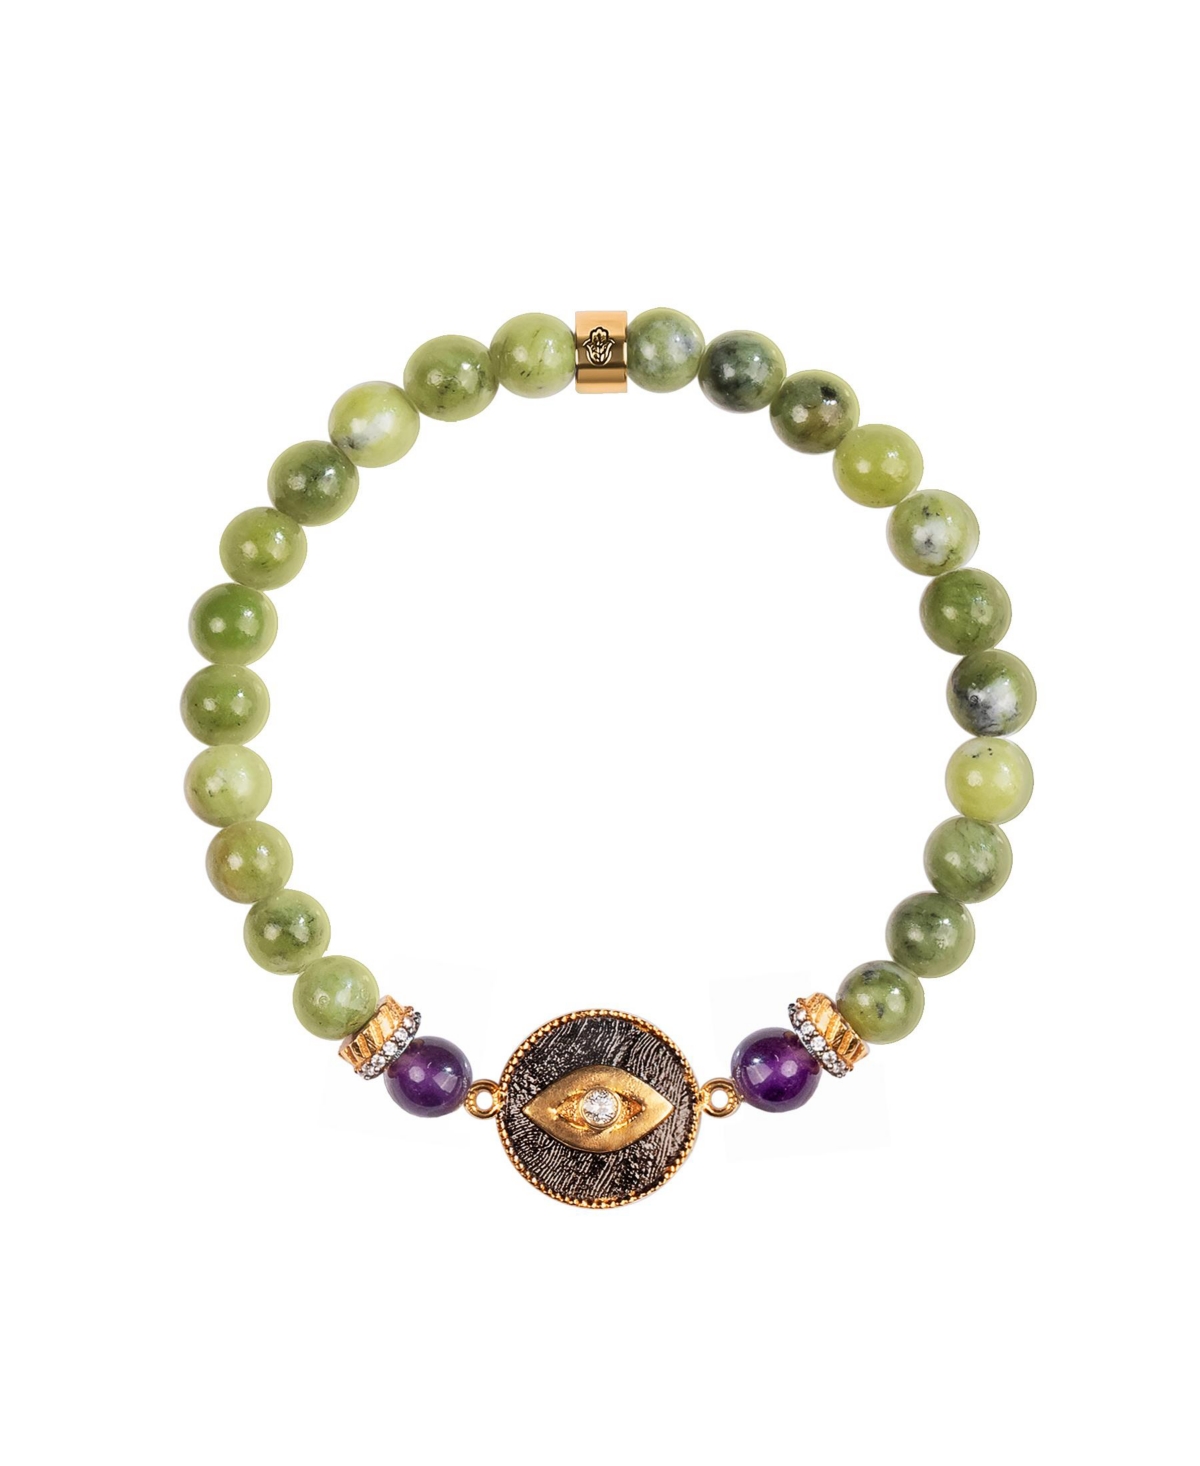 Defensive Trio Jade Stone Evil Eye Bracelet - Green/purple/gold